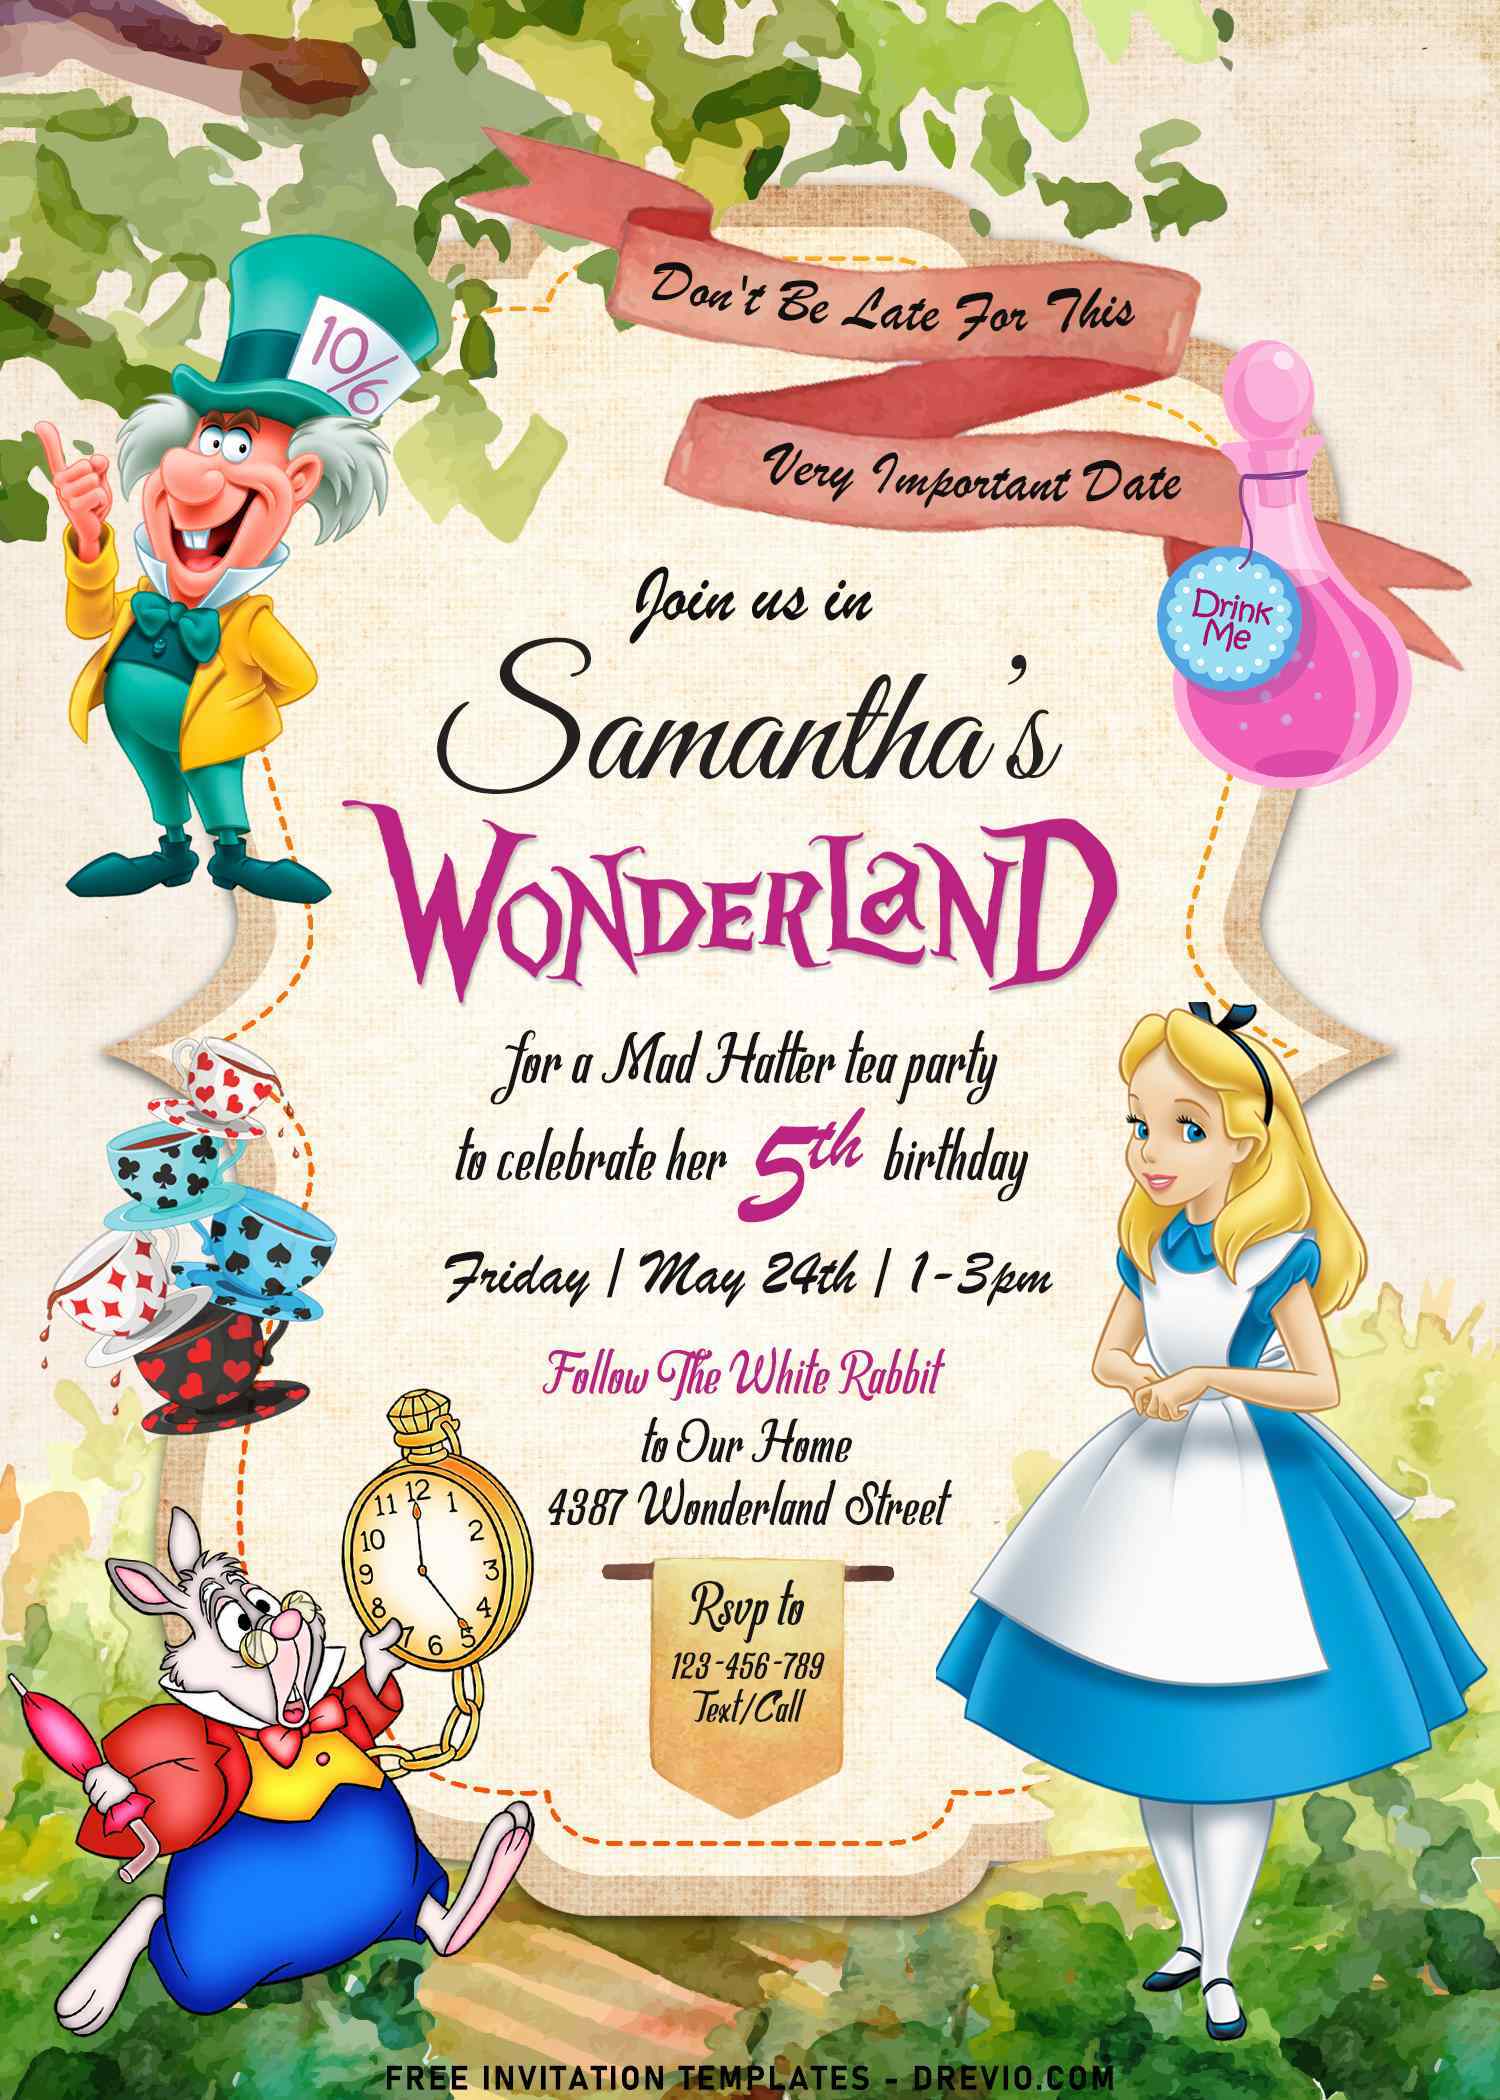 Alice in Wonderland Invitation Template